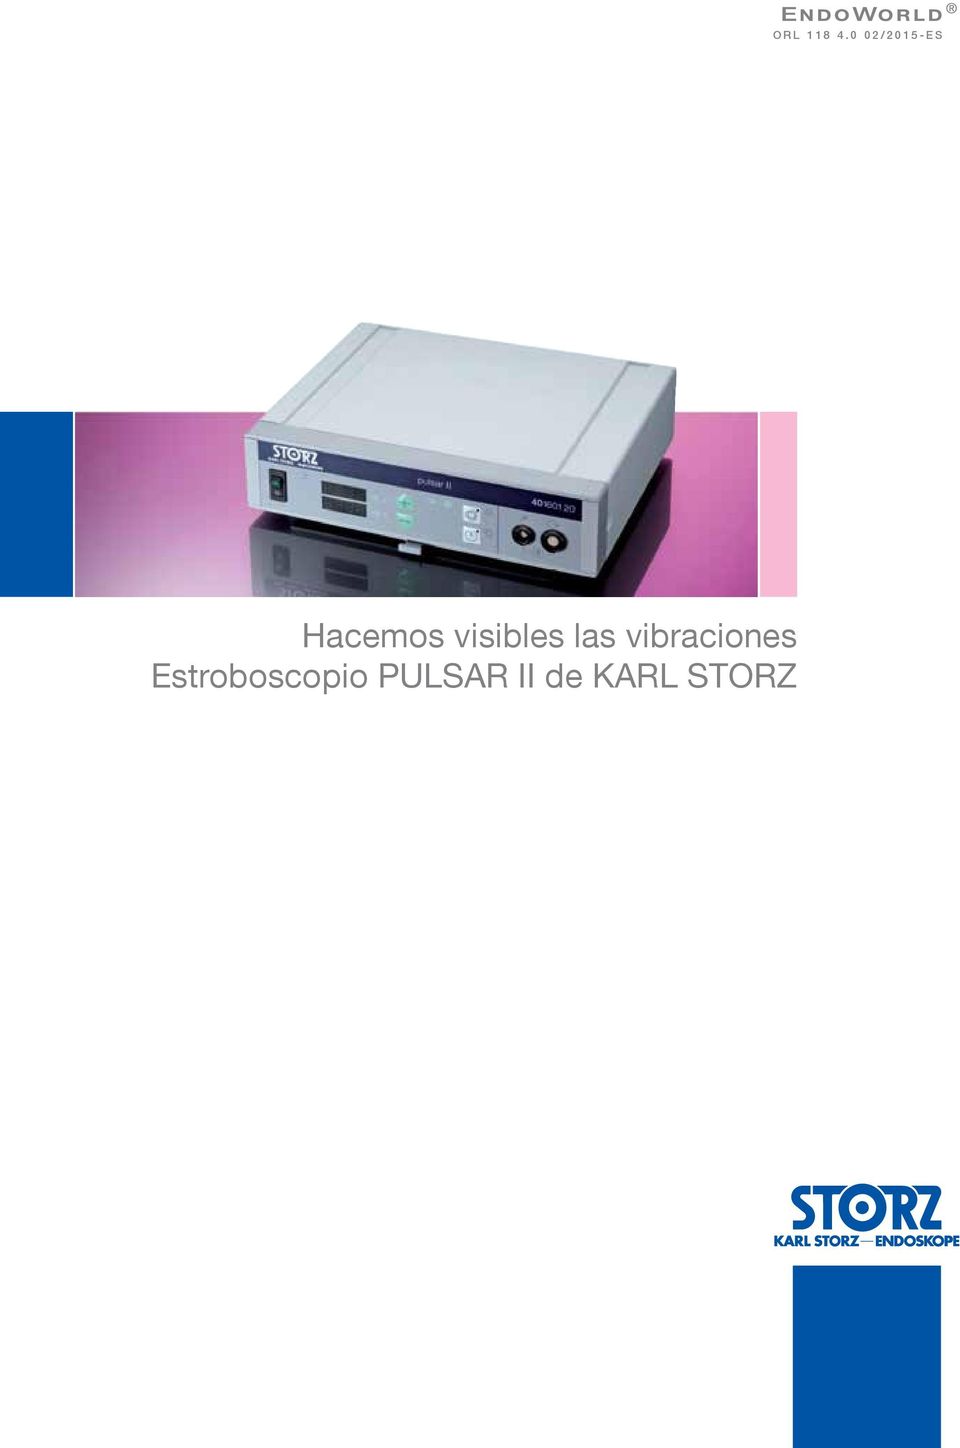 Estroboscopio PULSAR II